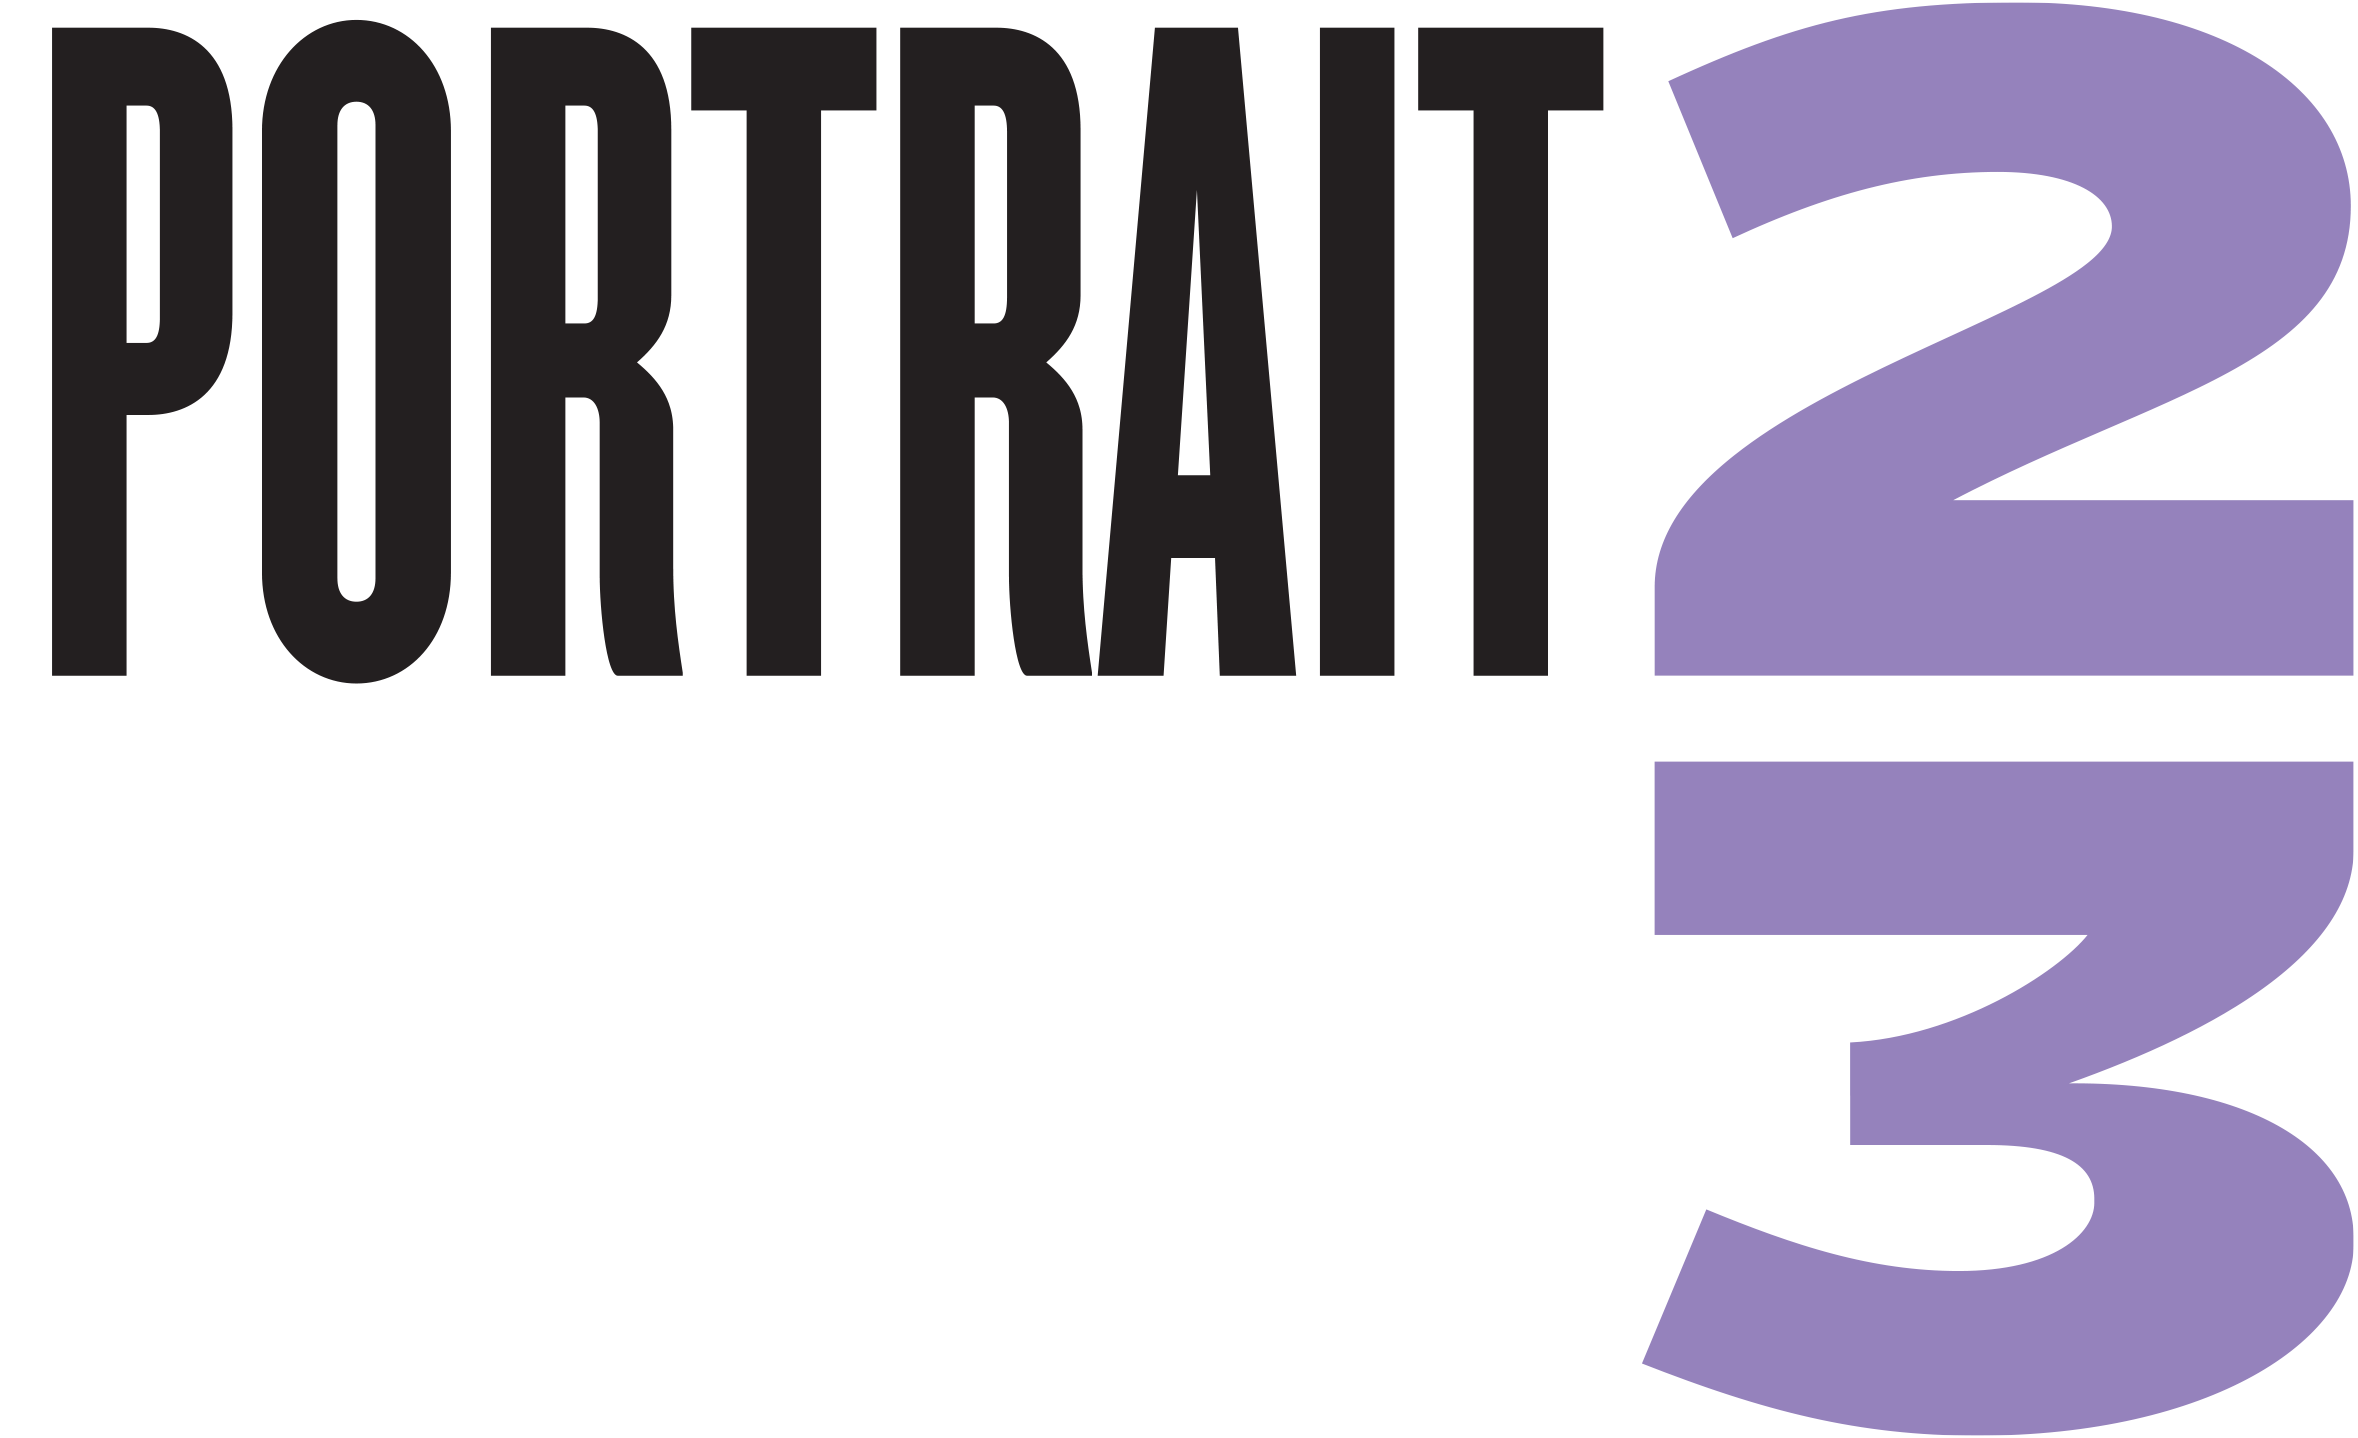 Portrait 23 Identity logo